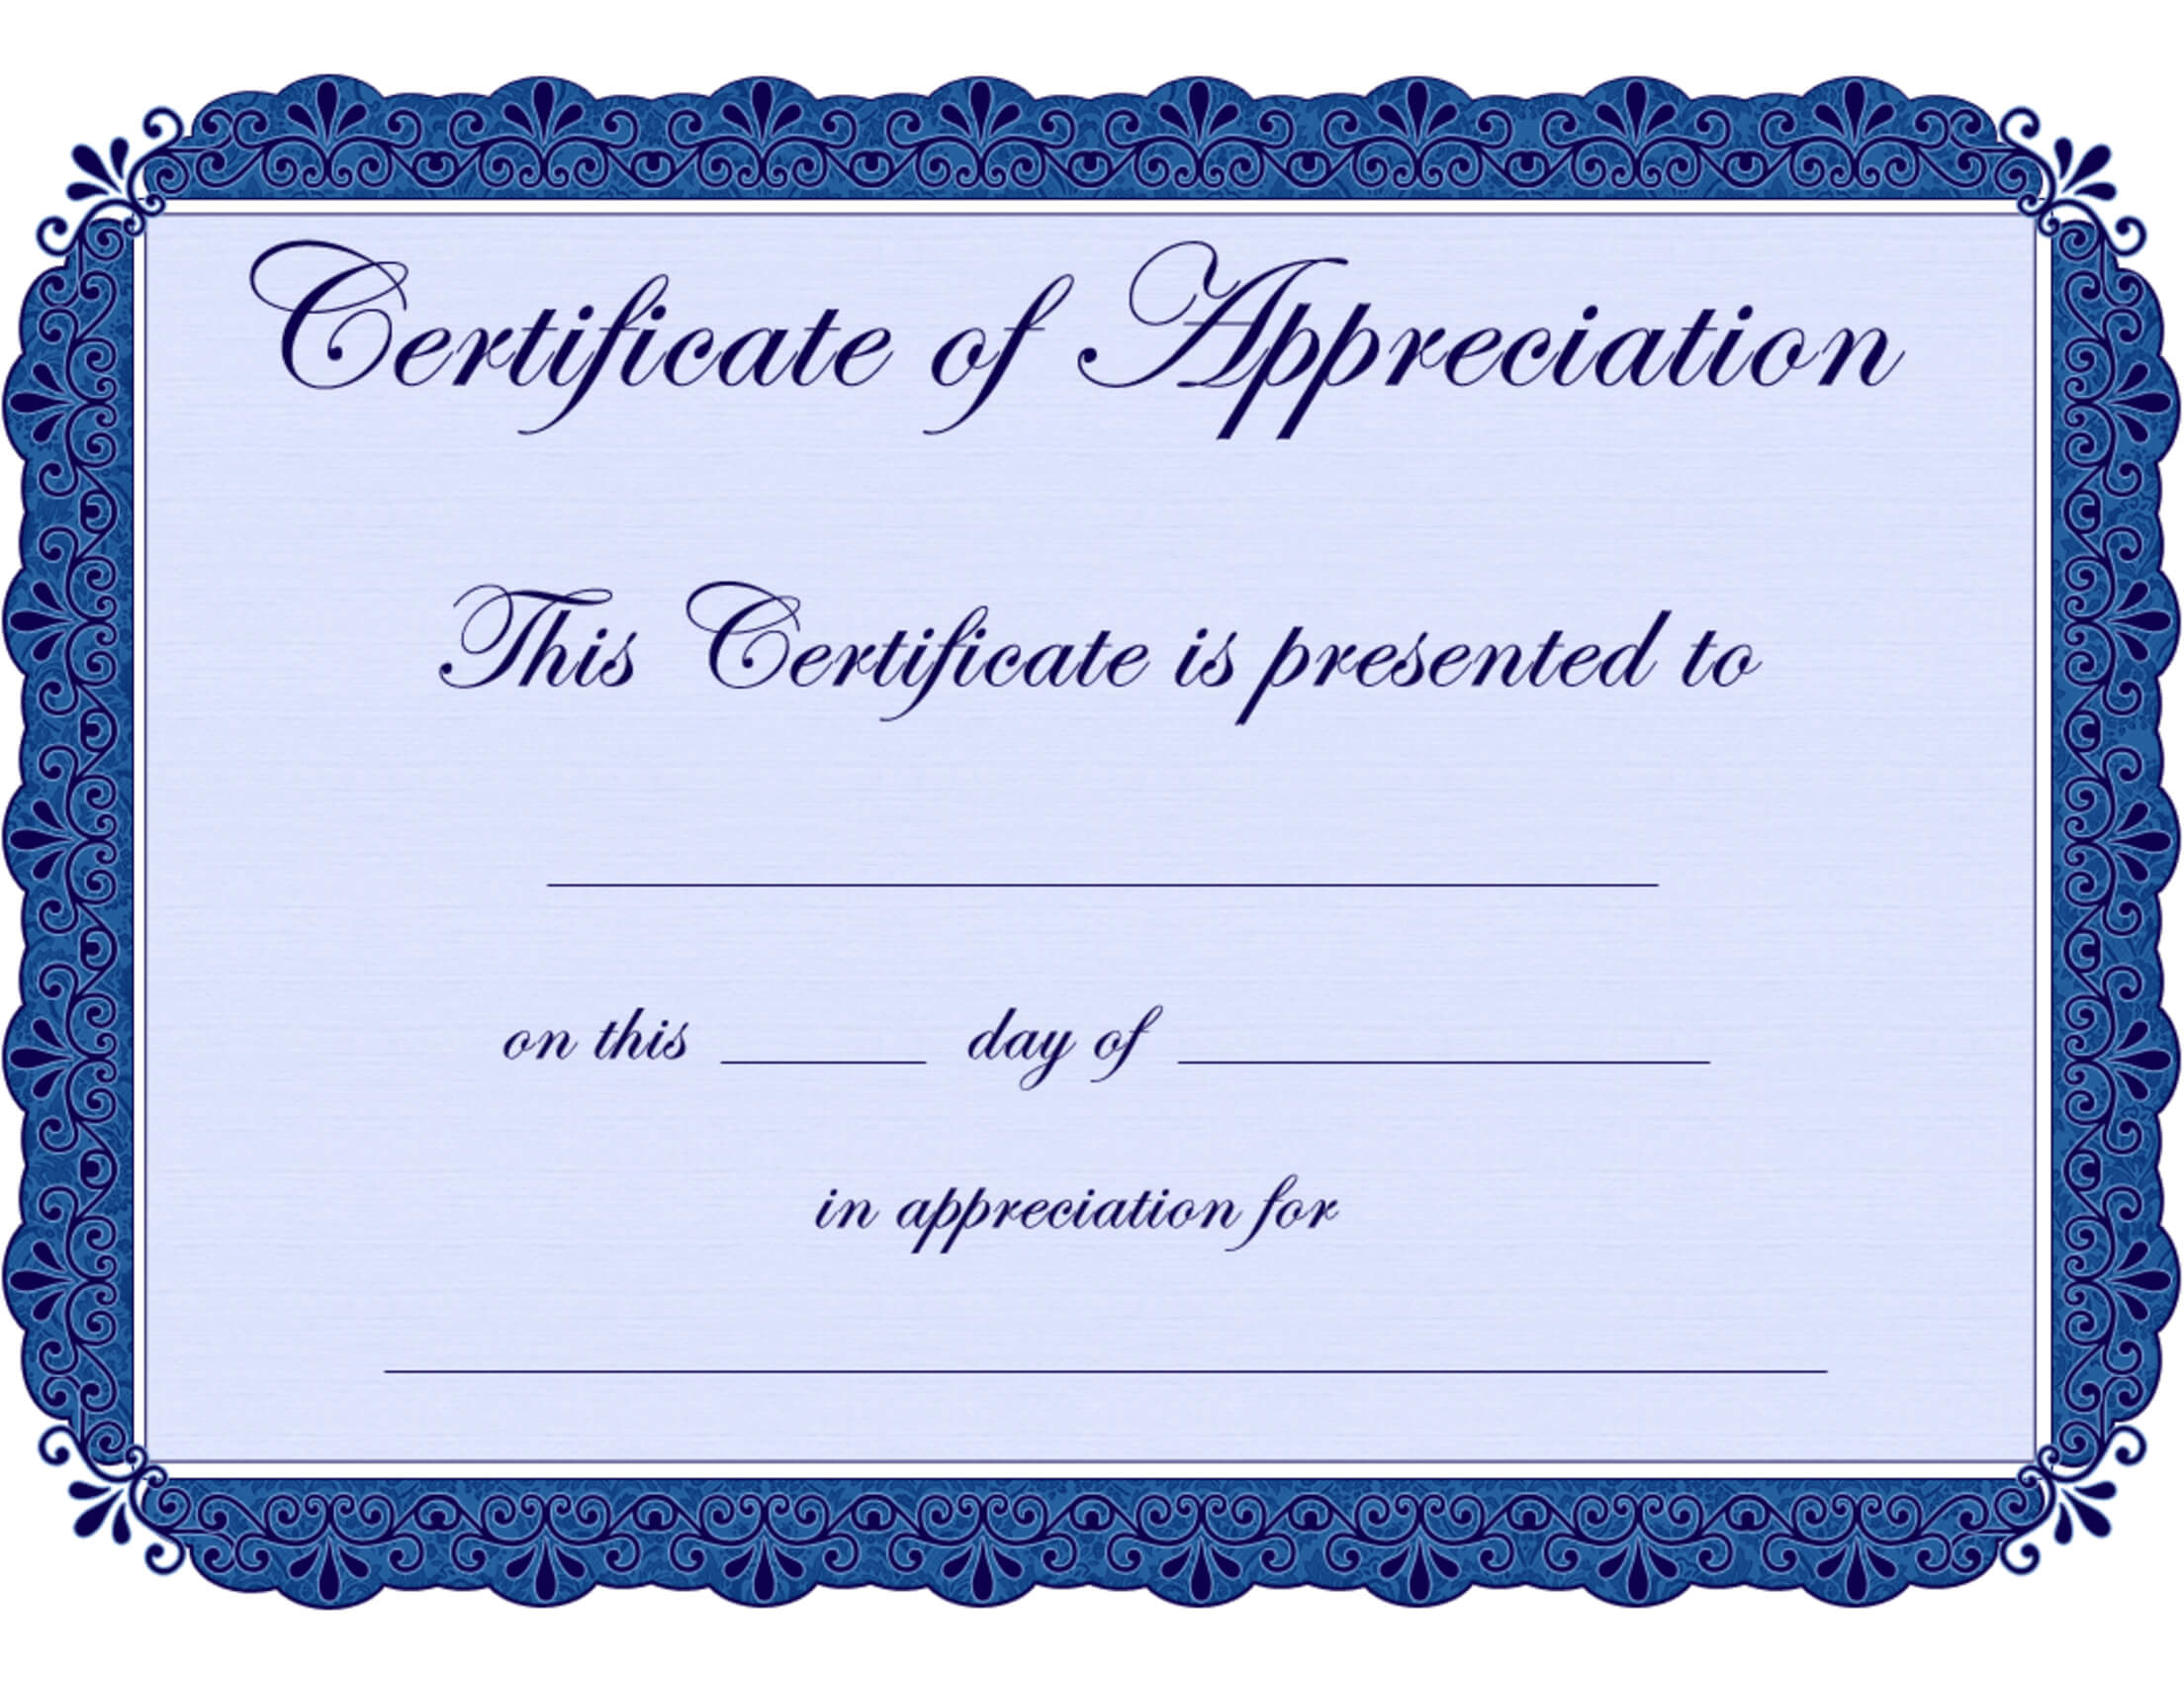 Free Printable Certificates Certificate Of Appreciation In Certificate Of Appreciation Template Free Printable